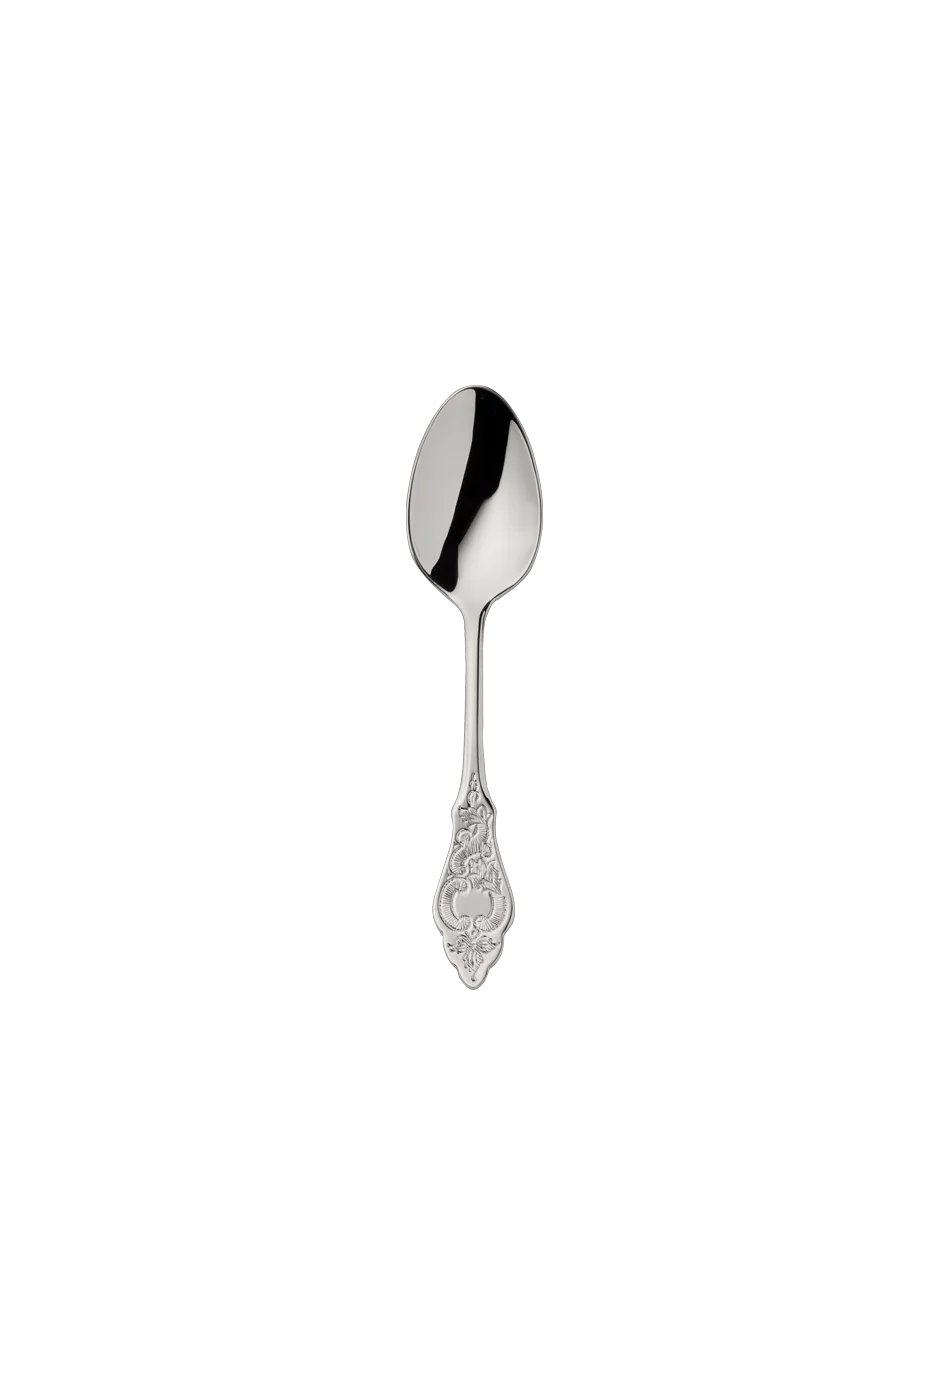 Ostfriesen Coffee Spoon 13,0 Cm (18/8 stainless steel)